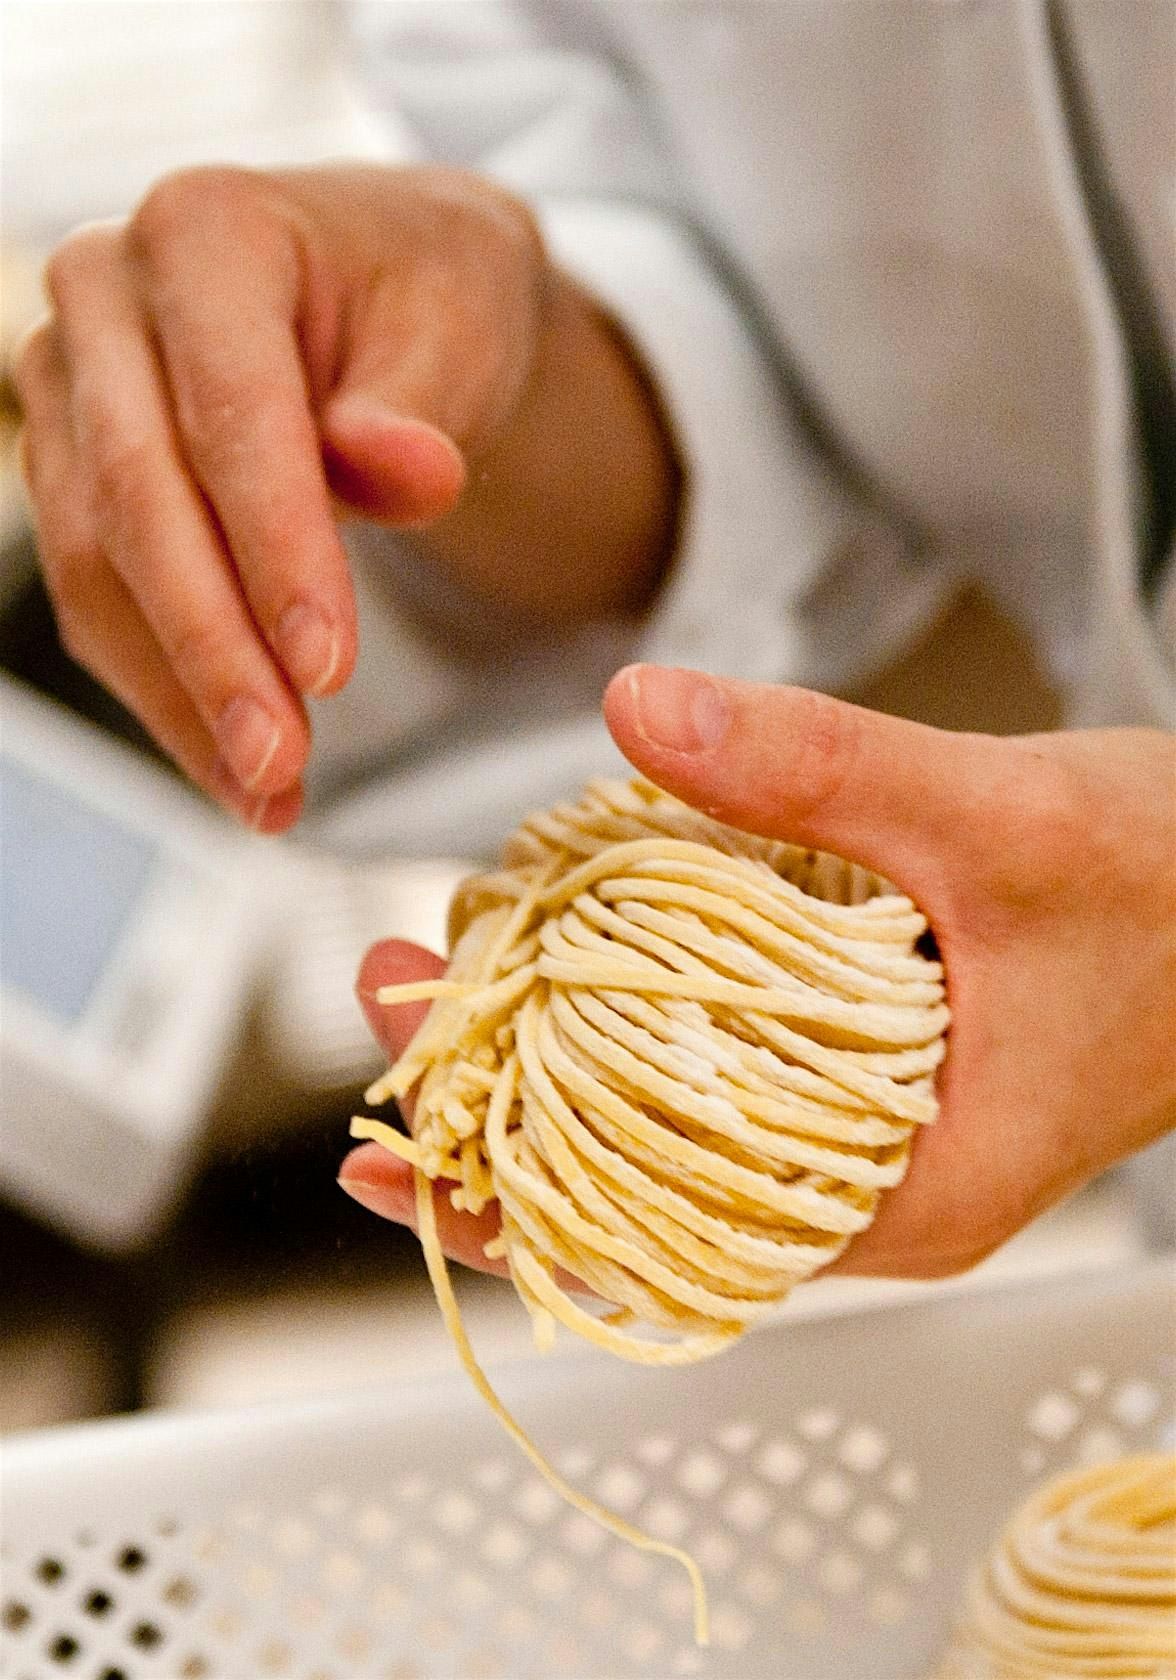 Hands-On Fresh Pasta-Making 101 Workshop at 2:00pm